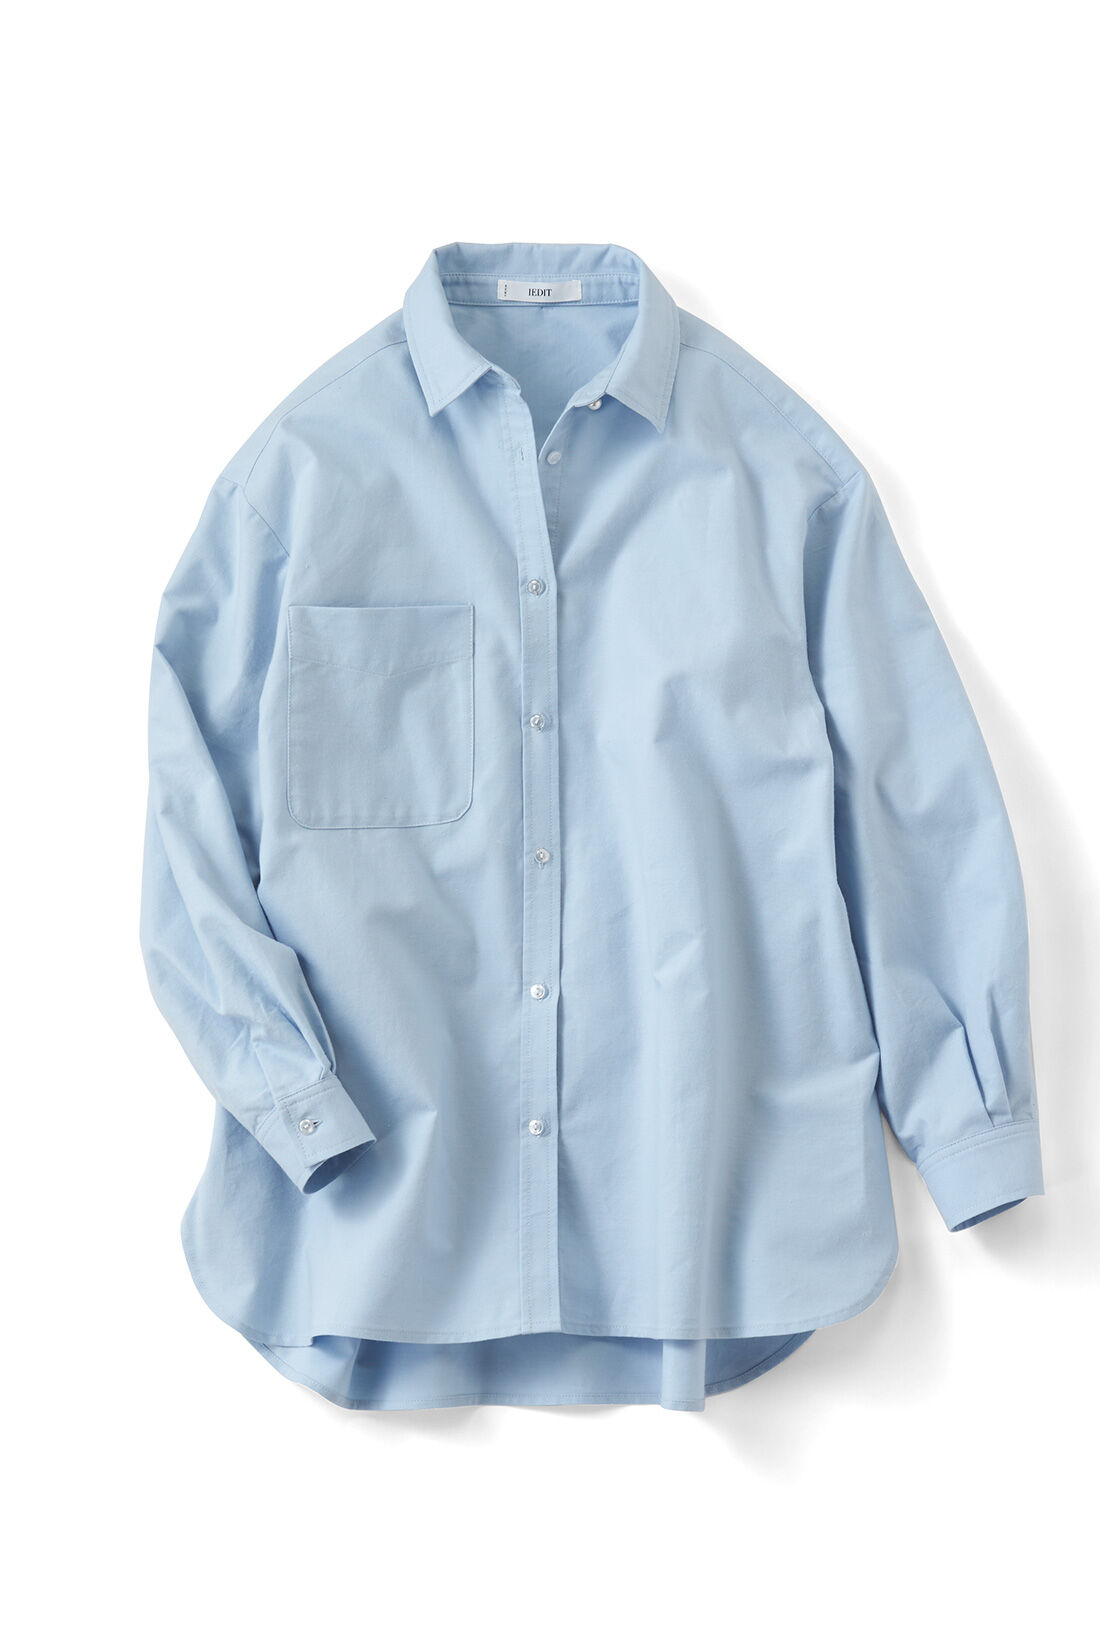 Real Stock|IEDIT[イディット]　バックフレアーデザインがきいた　オックスフォード素材のこなれ見えシャツ〈ブルー〉|ブルー